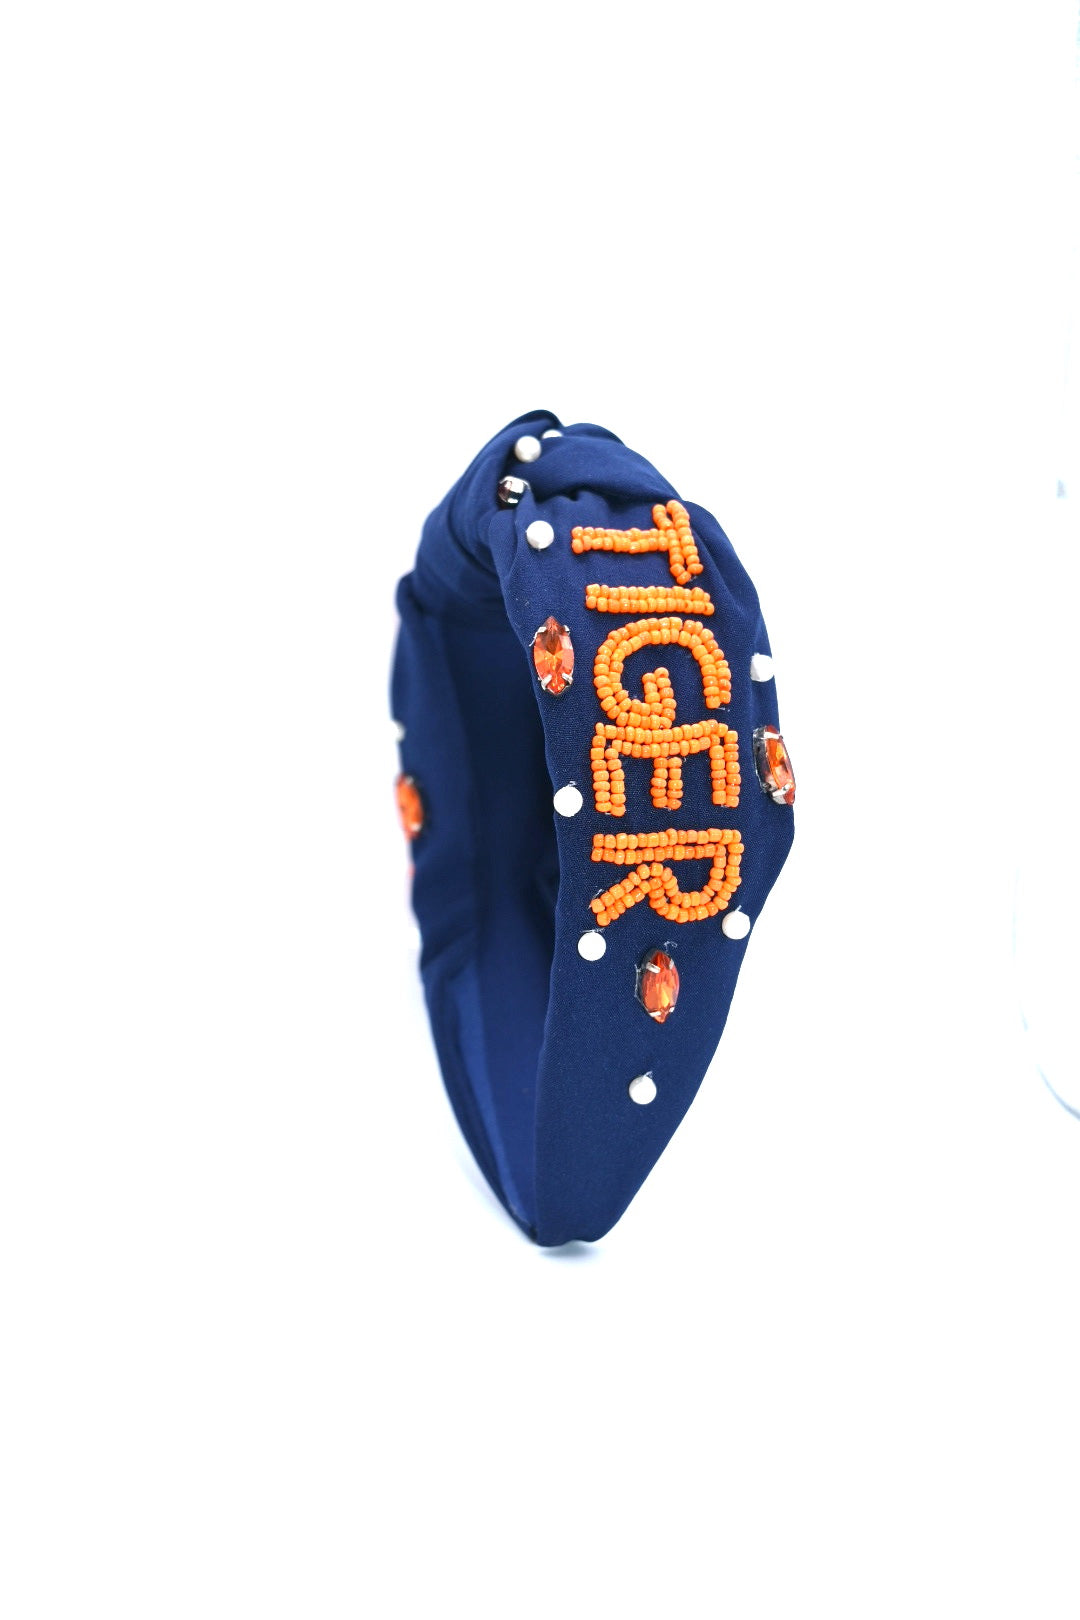 Auburn Gameday Beaded Headband Navy & Orange